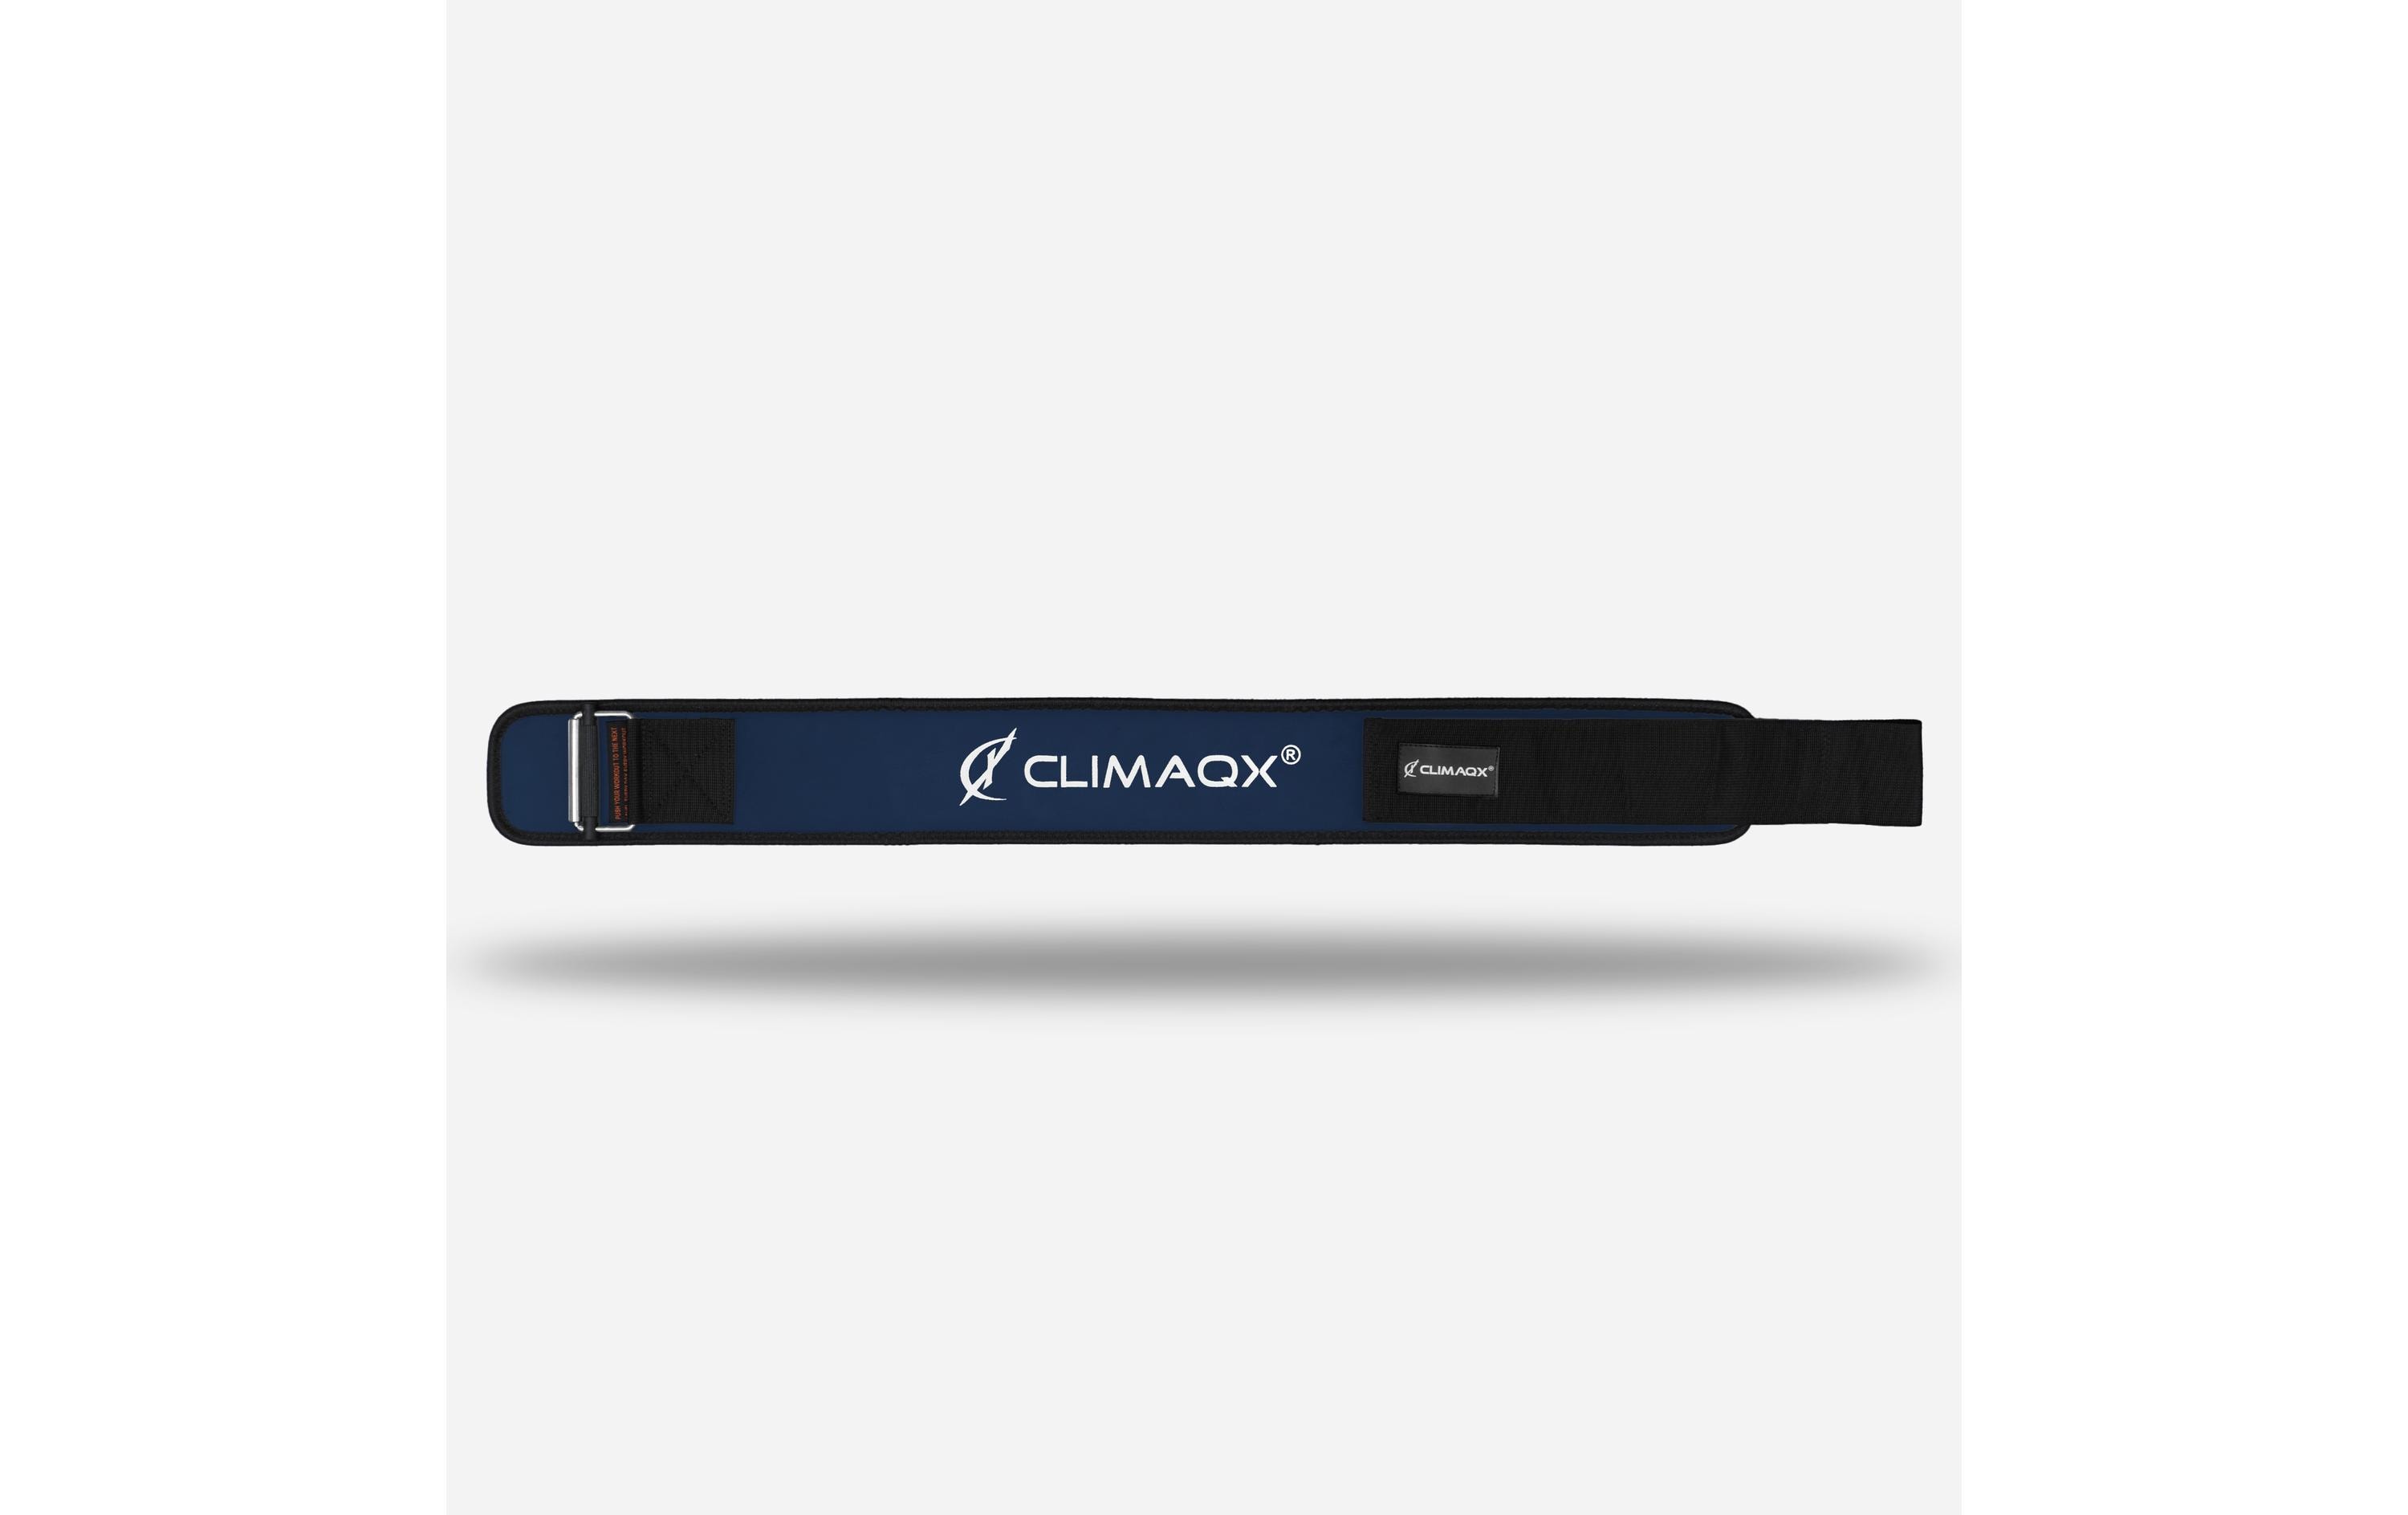 Climaqx Evolution Lifting Belt XS